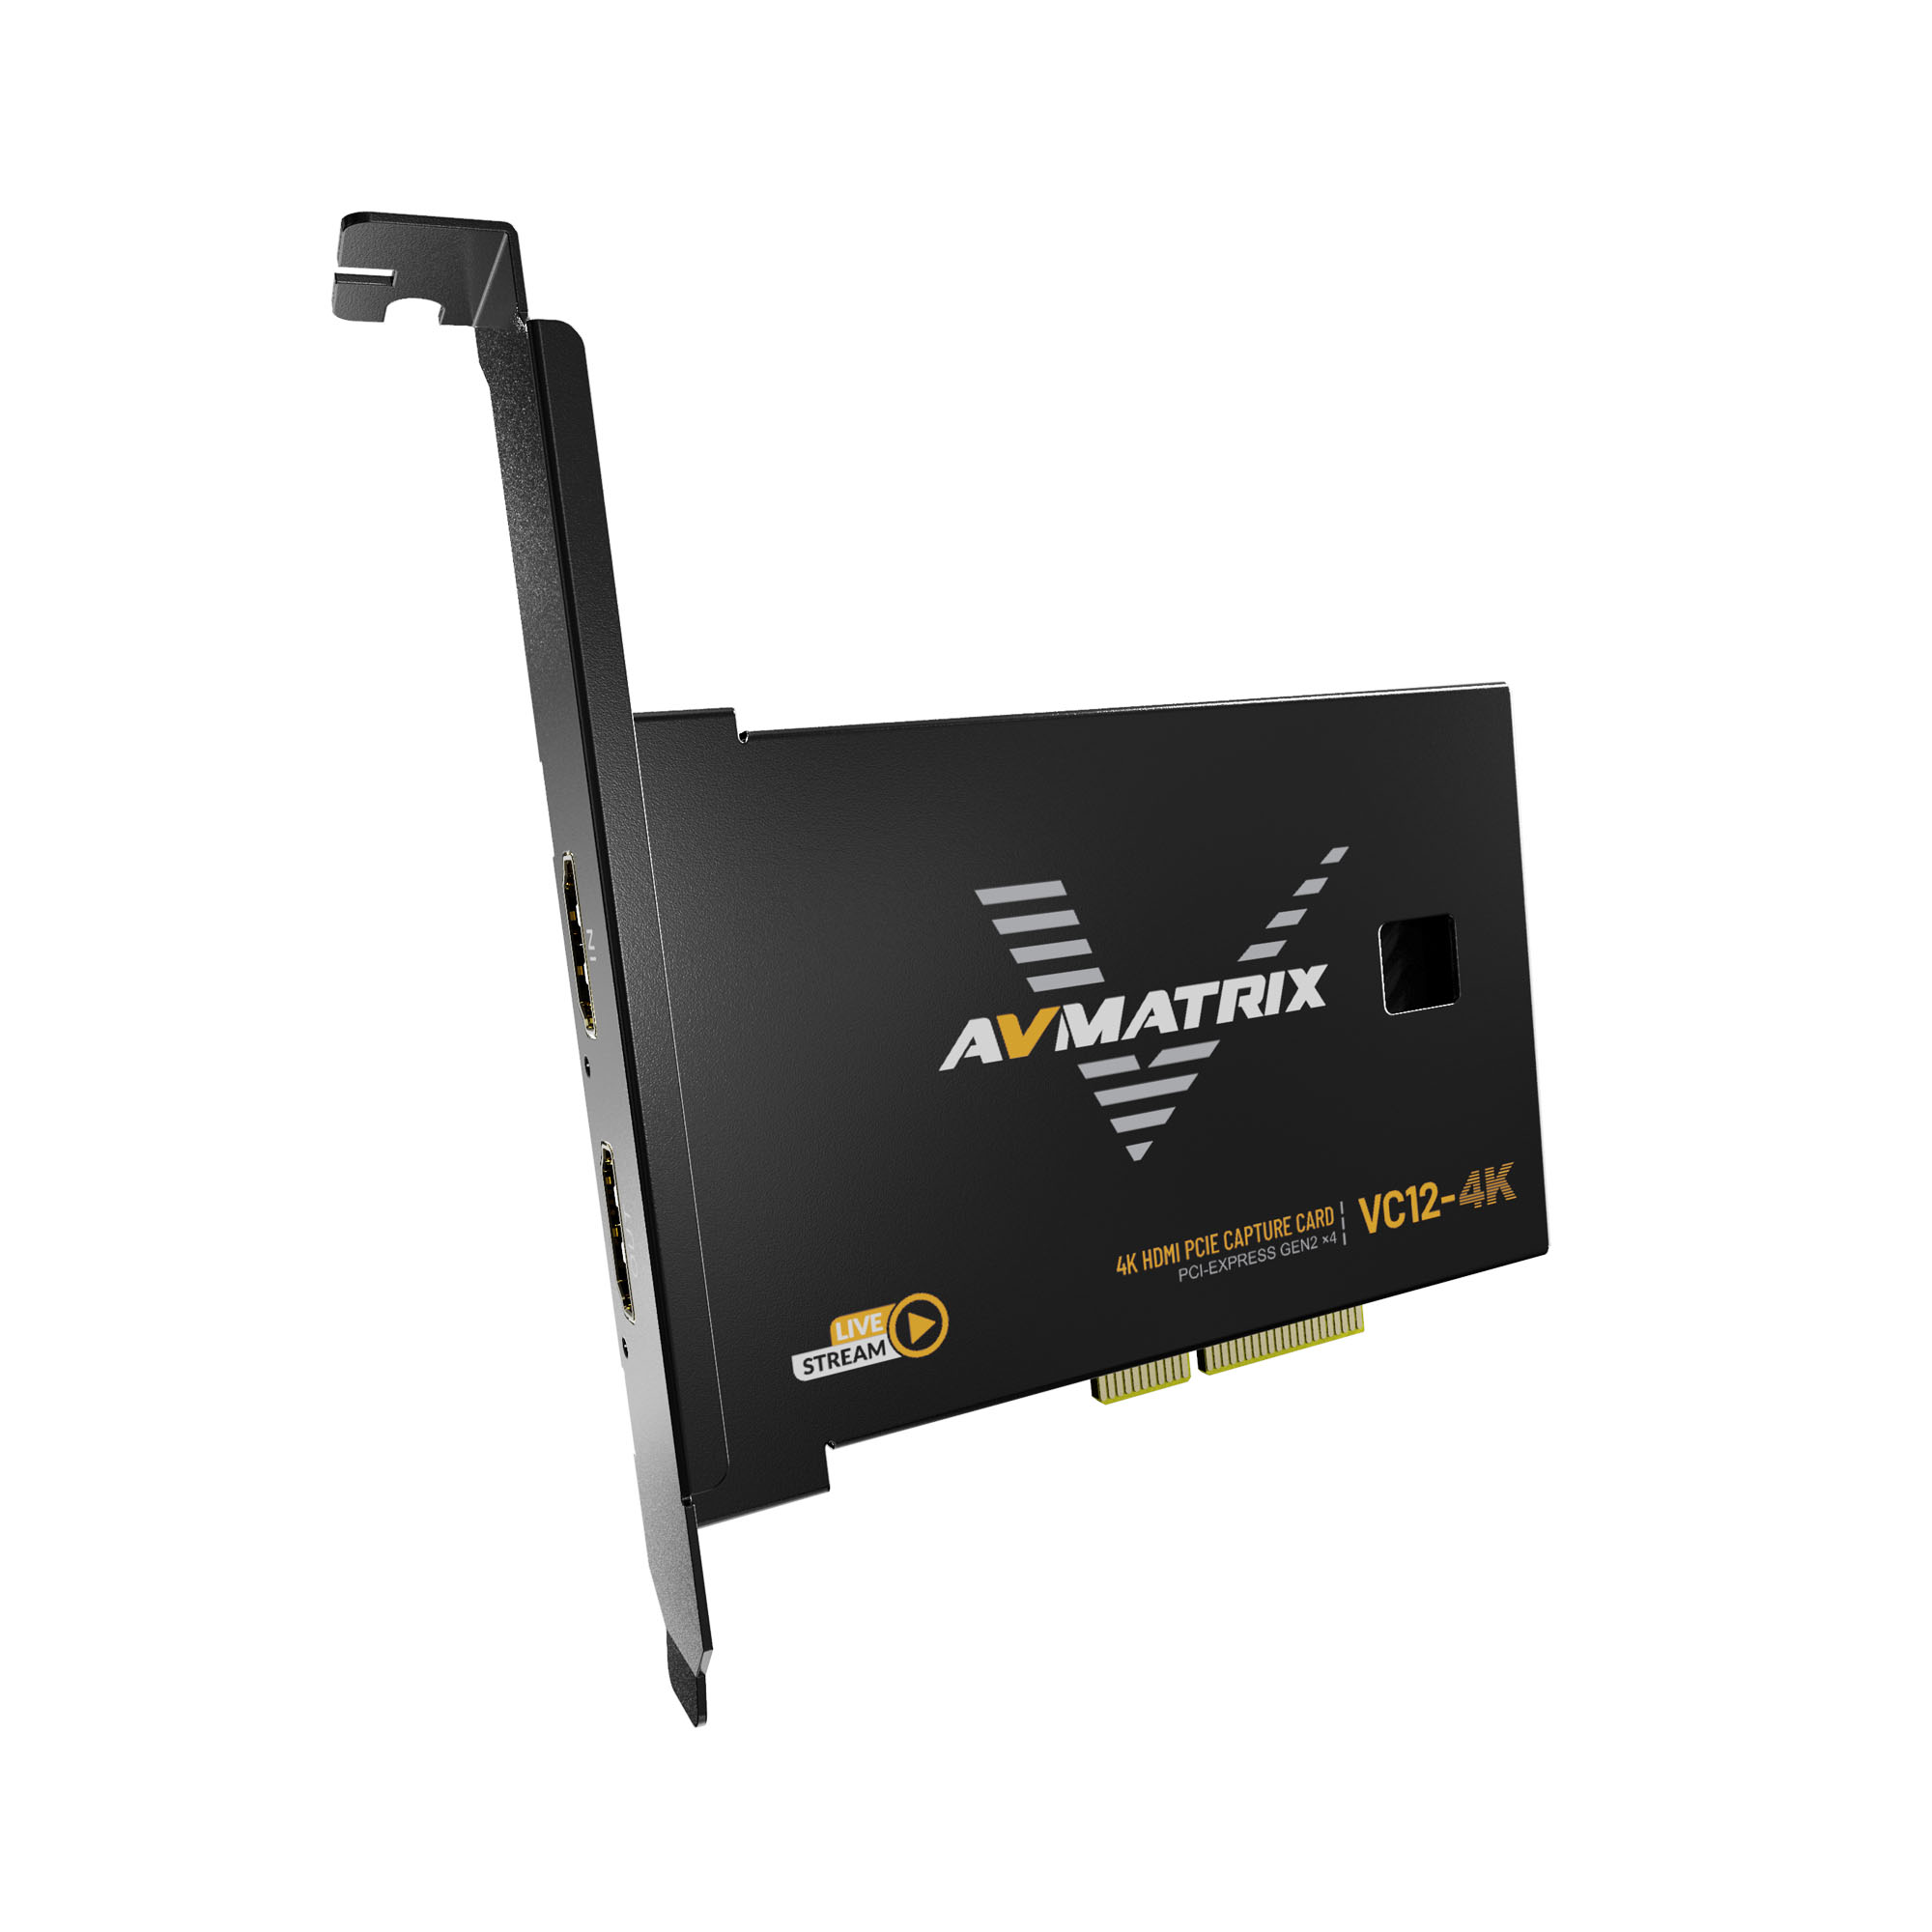    AVMATRIX VC12-4K HDMI PCIE   Ultra-mart